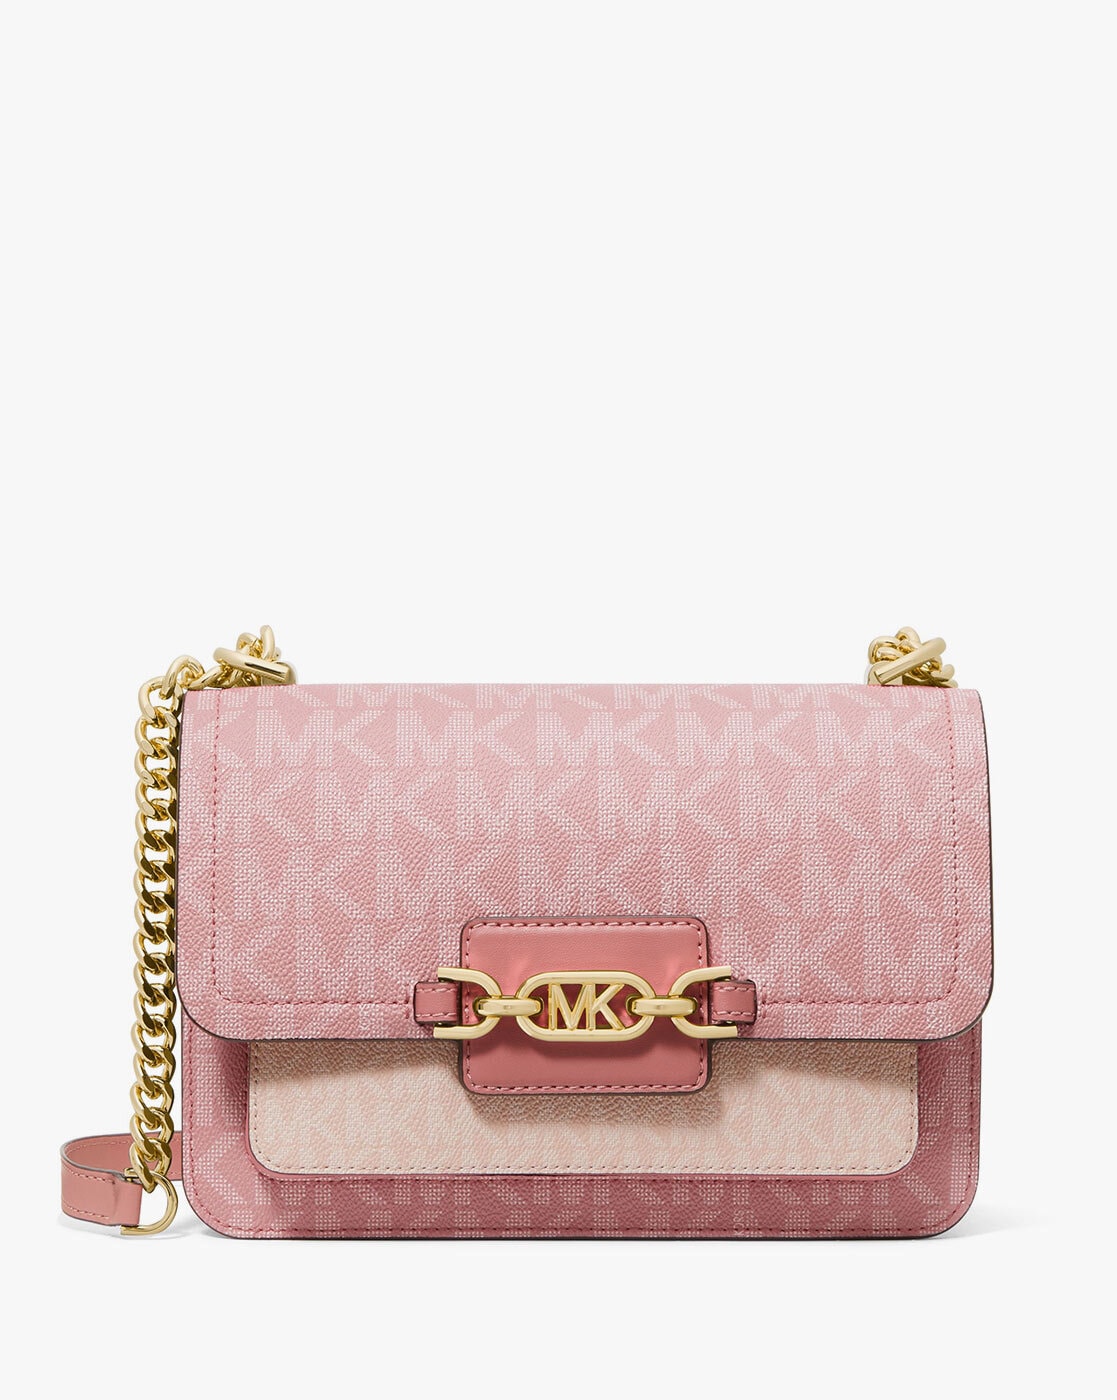 Michael Kors Women Fashion Crossbody Handbag Purse Shoulder Messenger Bag-  Pink | eBay